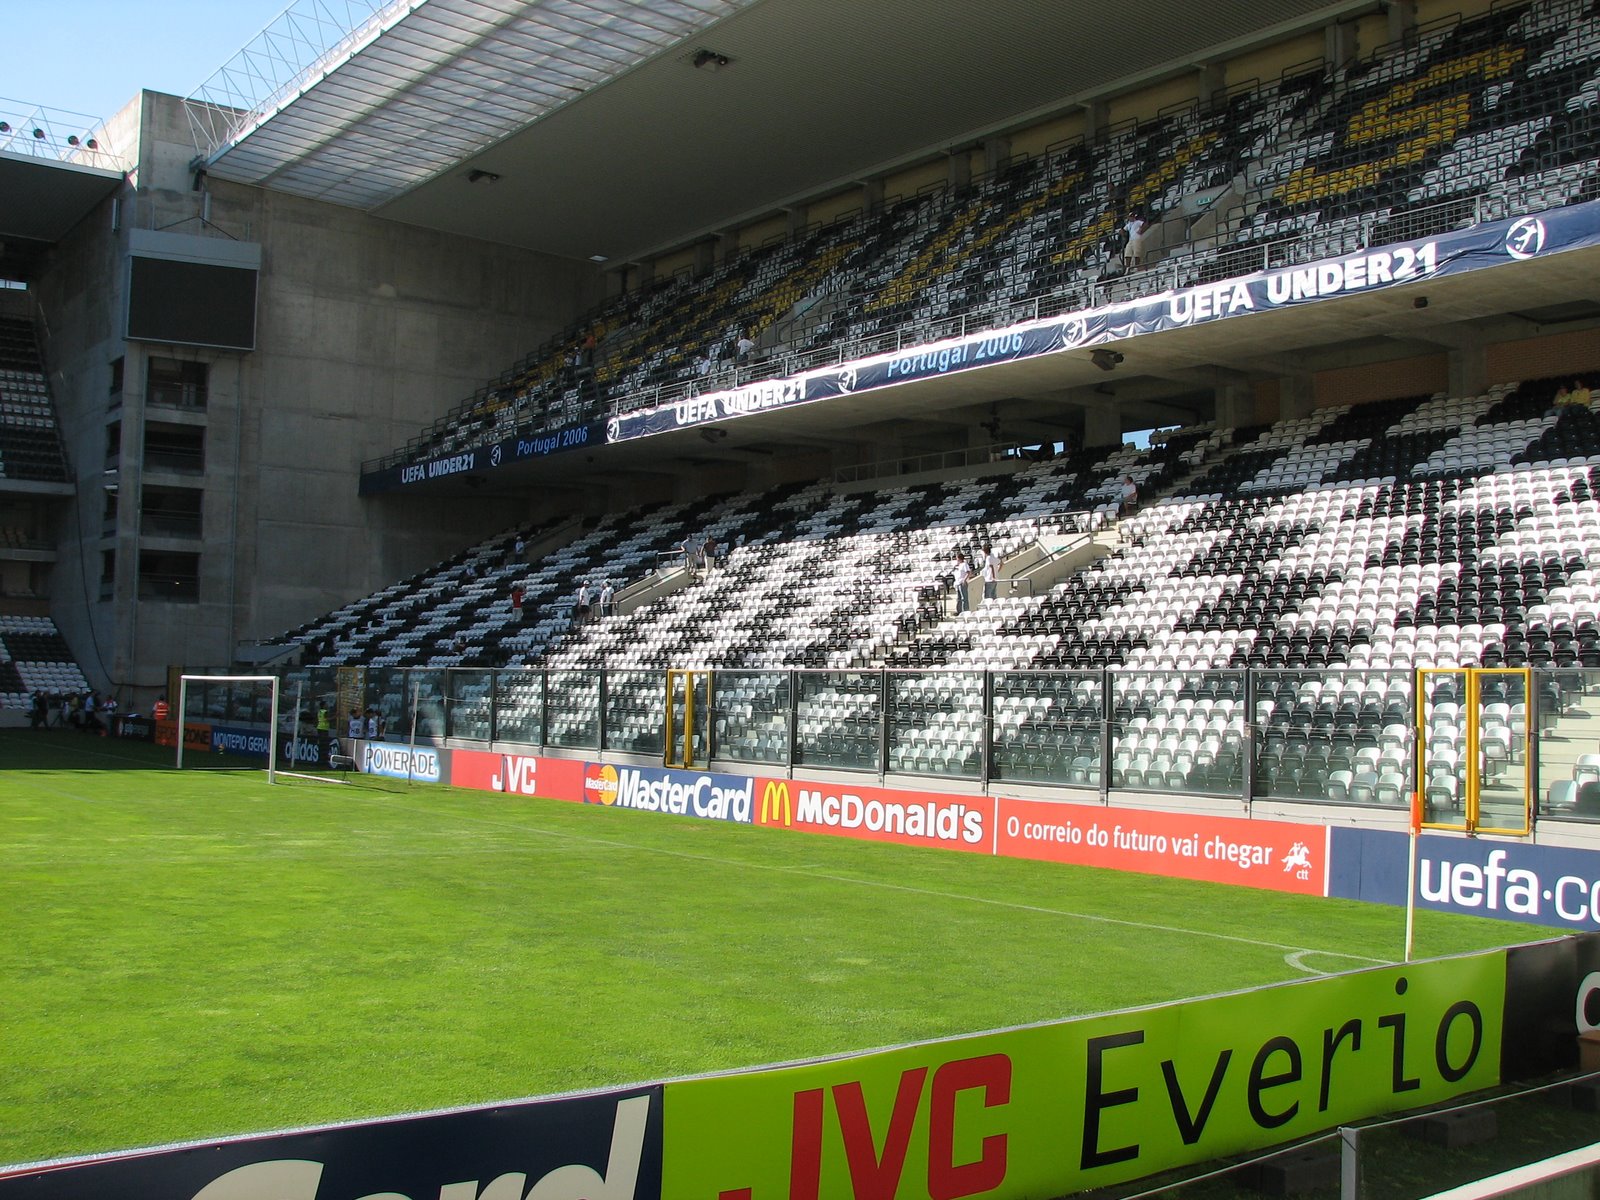 boavista-porto-stadium-86134.jpg